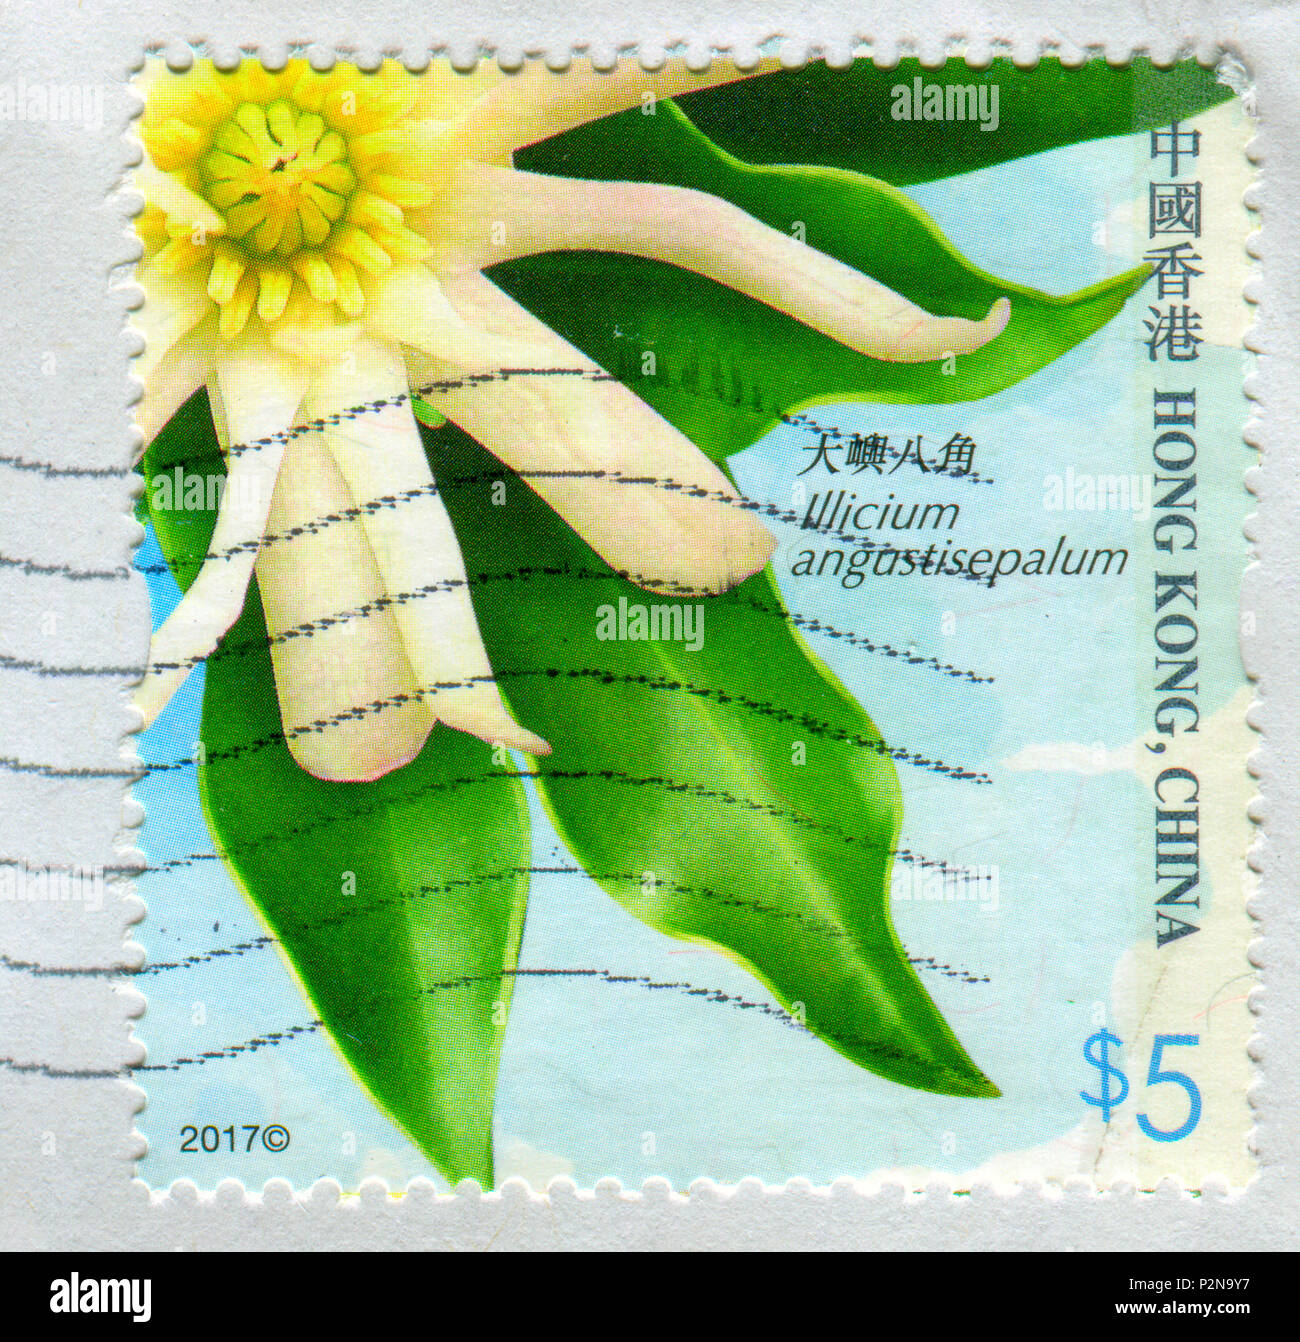 GOMEL, BELARUS, 19 NOVEMBER 2017, Stamp printed in HONG KONG, China shows image of the Illicium angustisepalum, circa 2017. Stock Photo